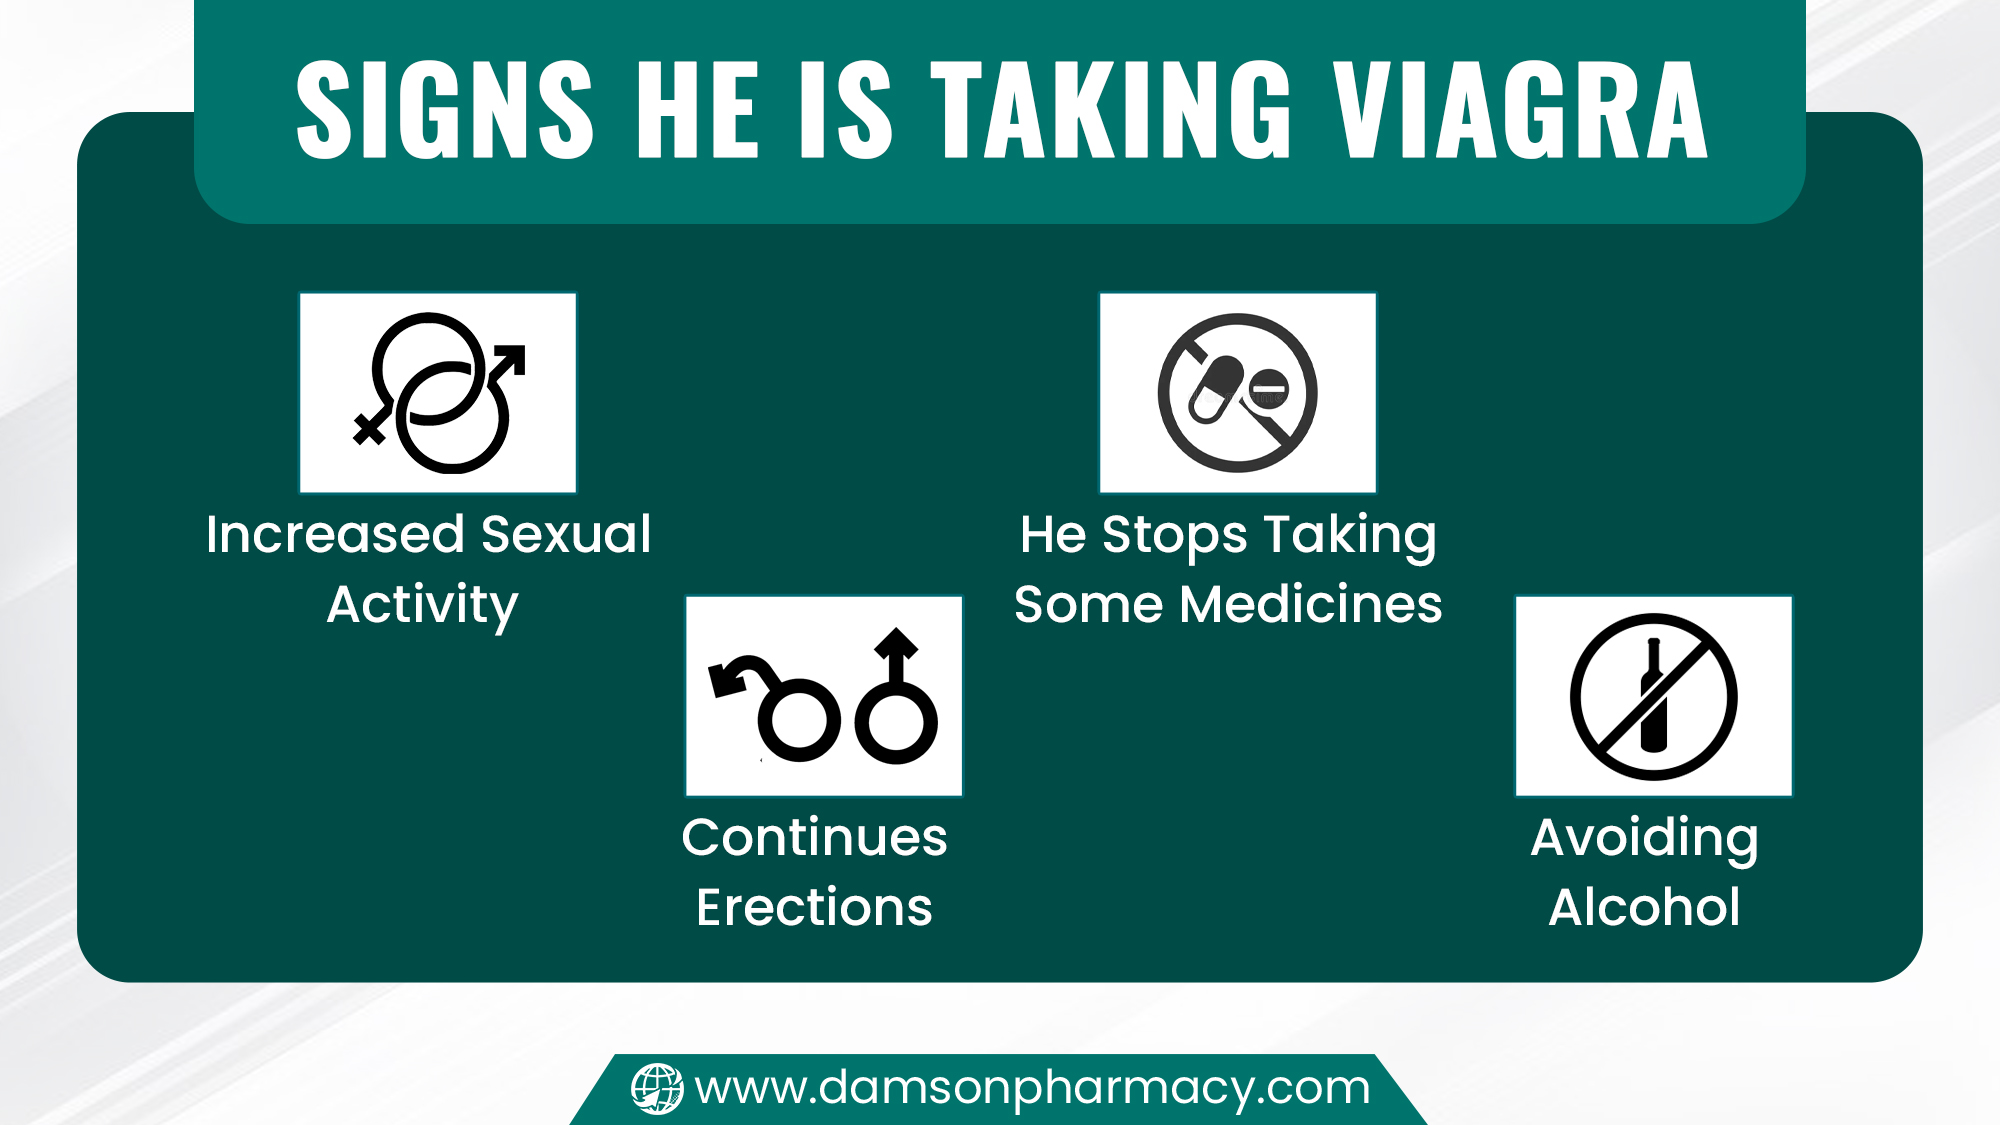 Signs He is Taking Viagra